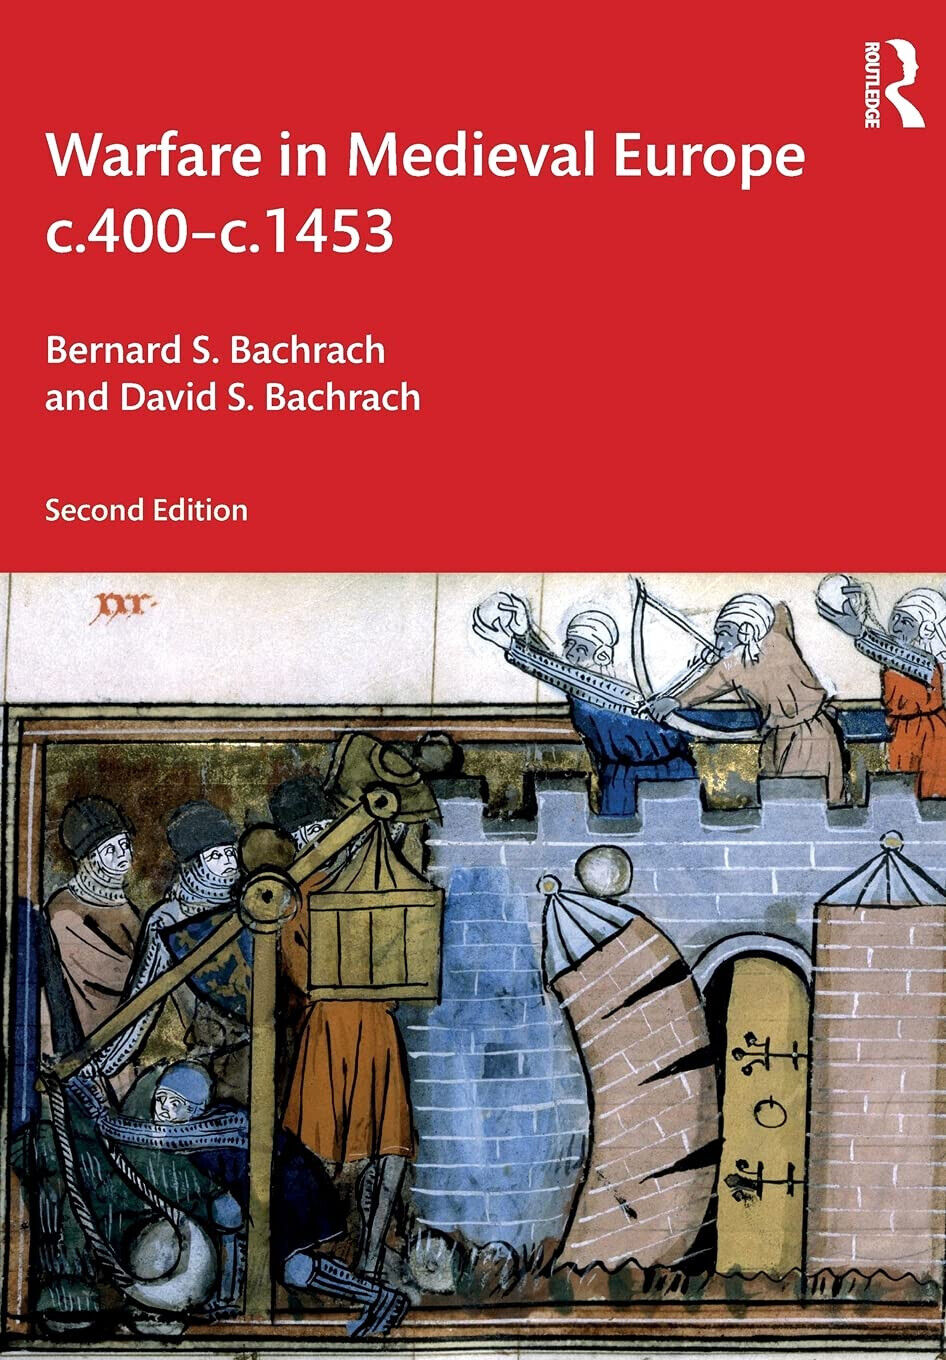 Warfare In Medieval Europe C.400-c.1453 - Bernard S. Bachrach - 2021